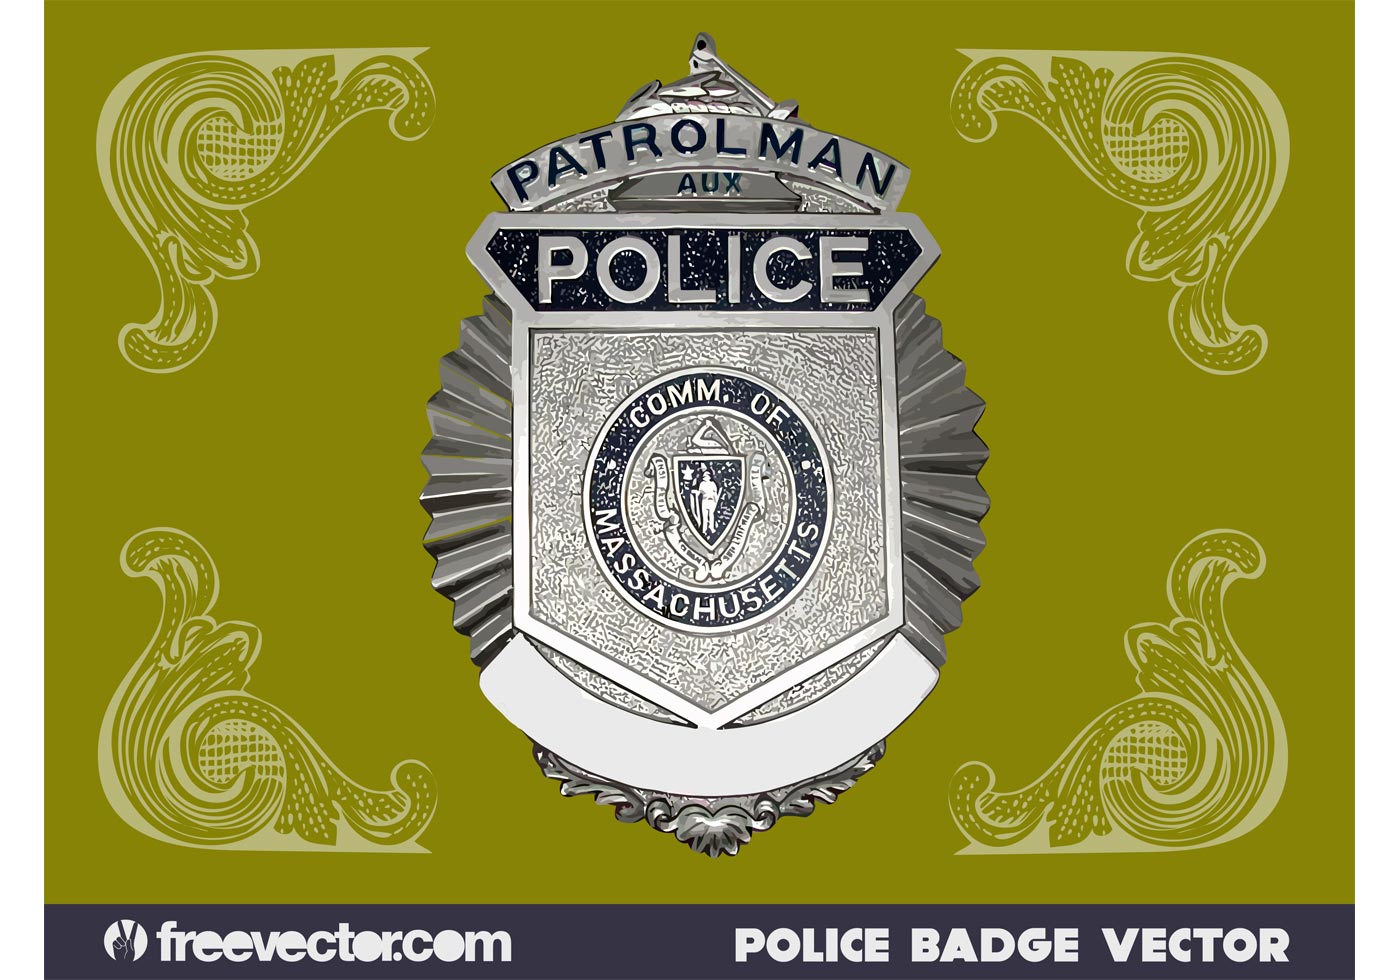 Police Badge Graphics - Download Free Vector Art, Stock ...